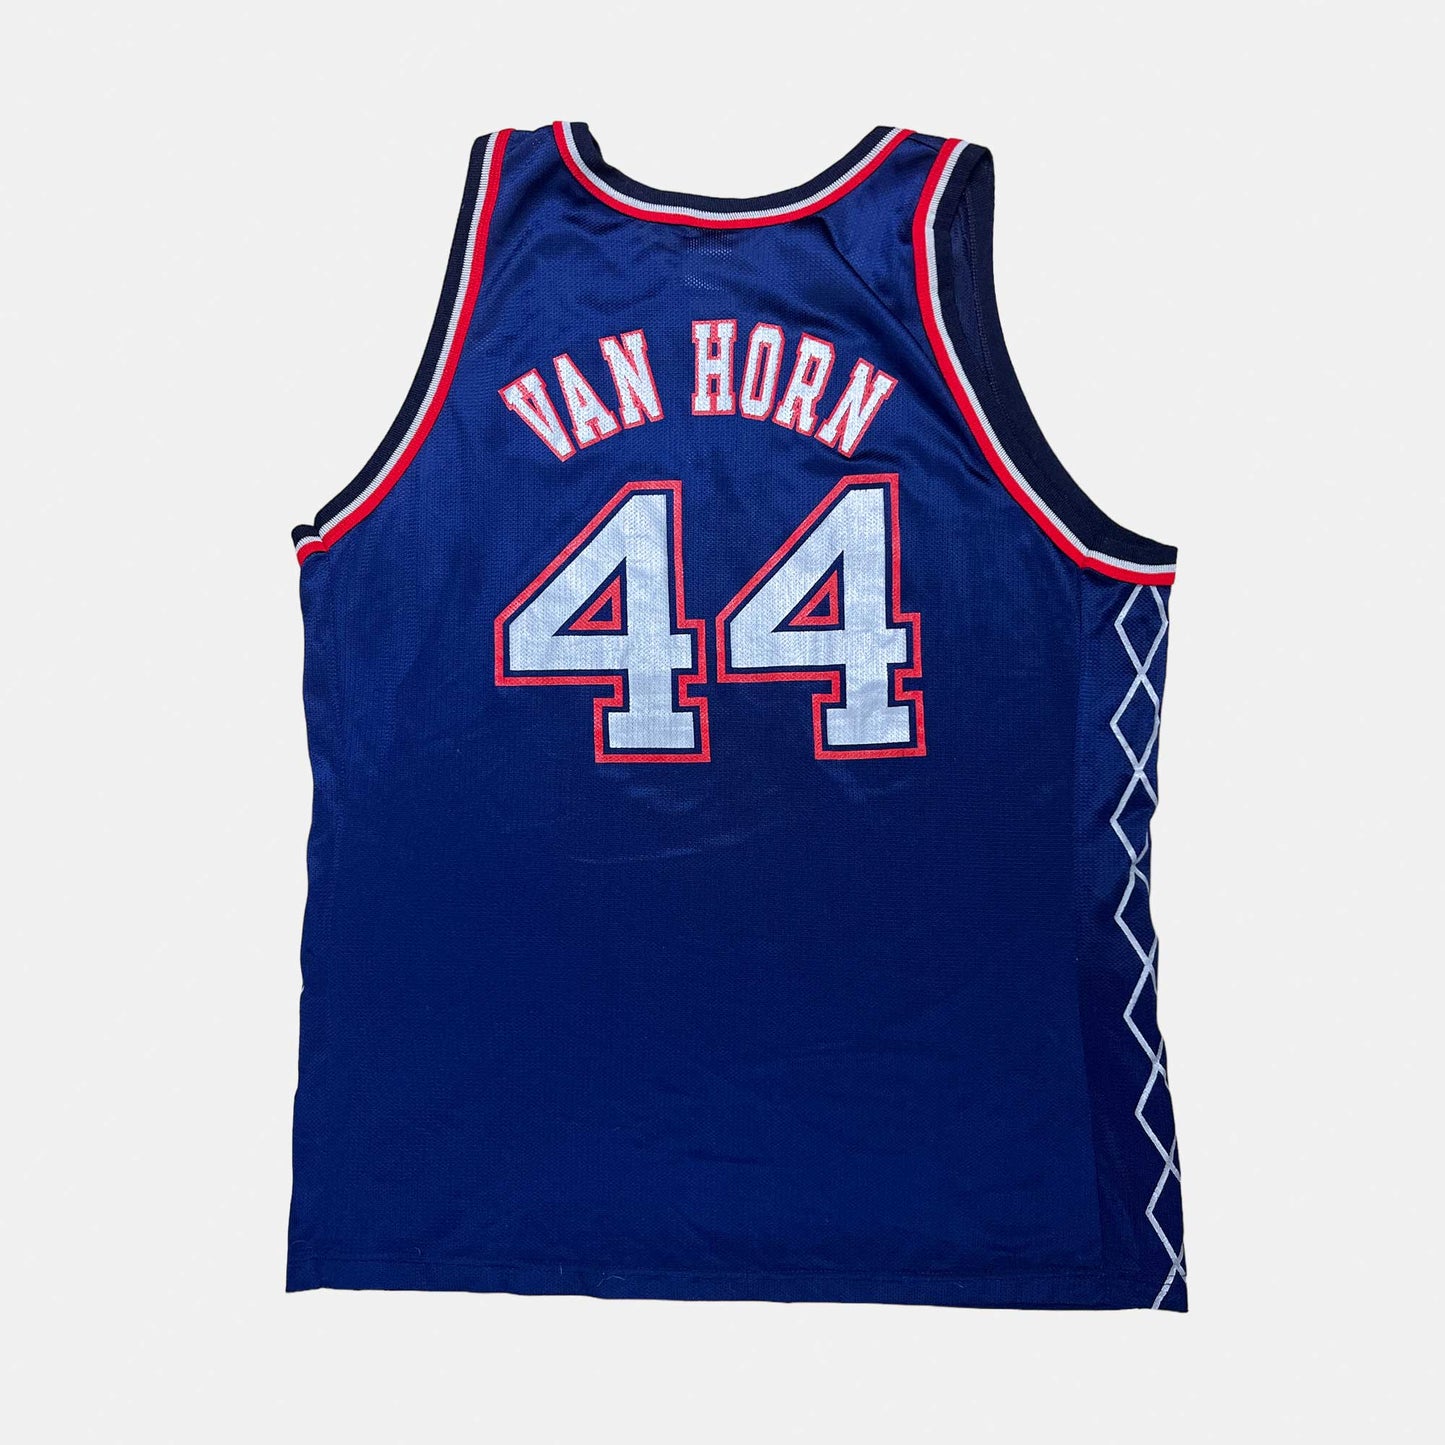 New Jersey Nets - Keith Van Horn - Größe XL / US 48 - Champion - NBA Trikot